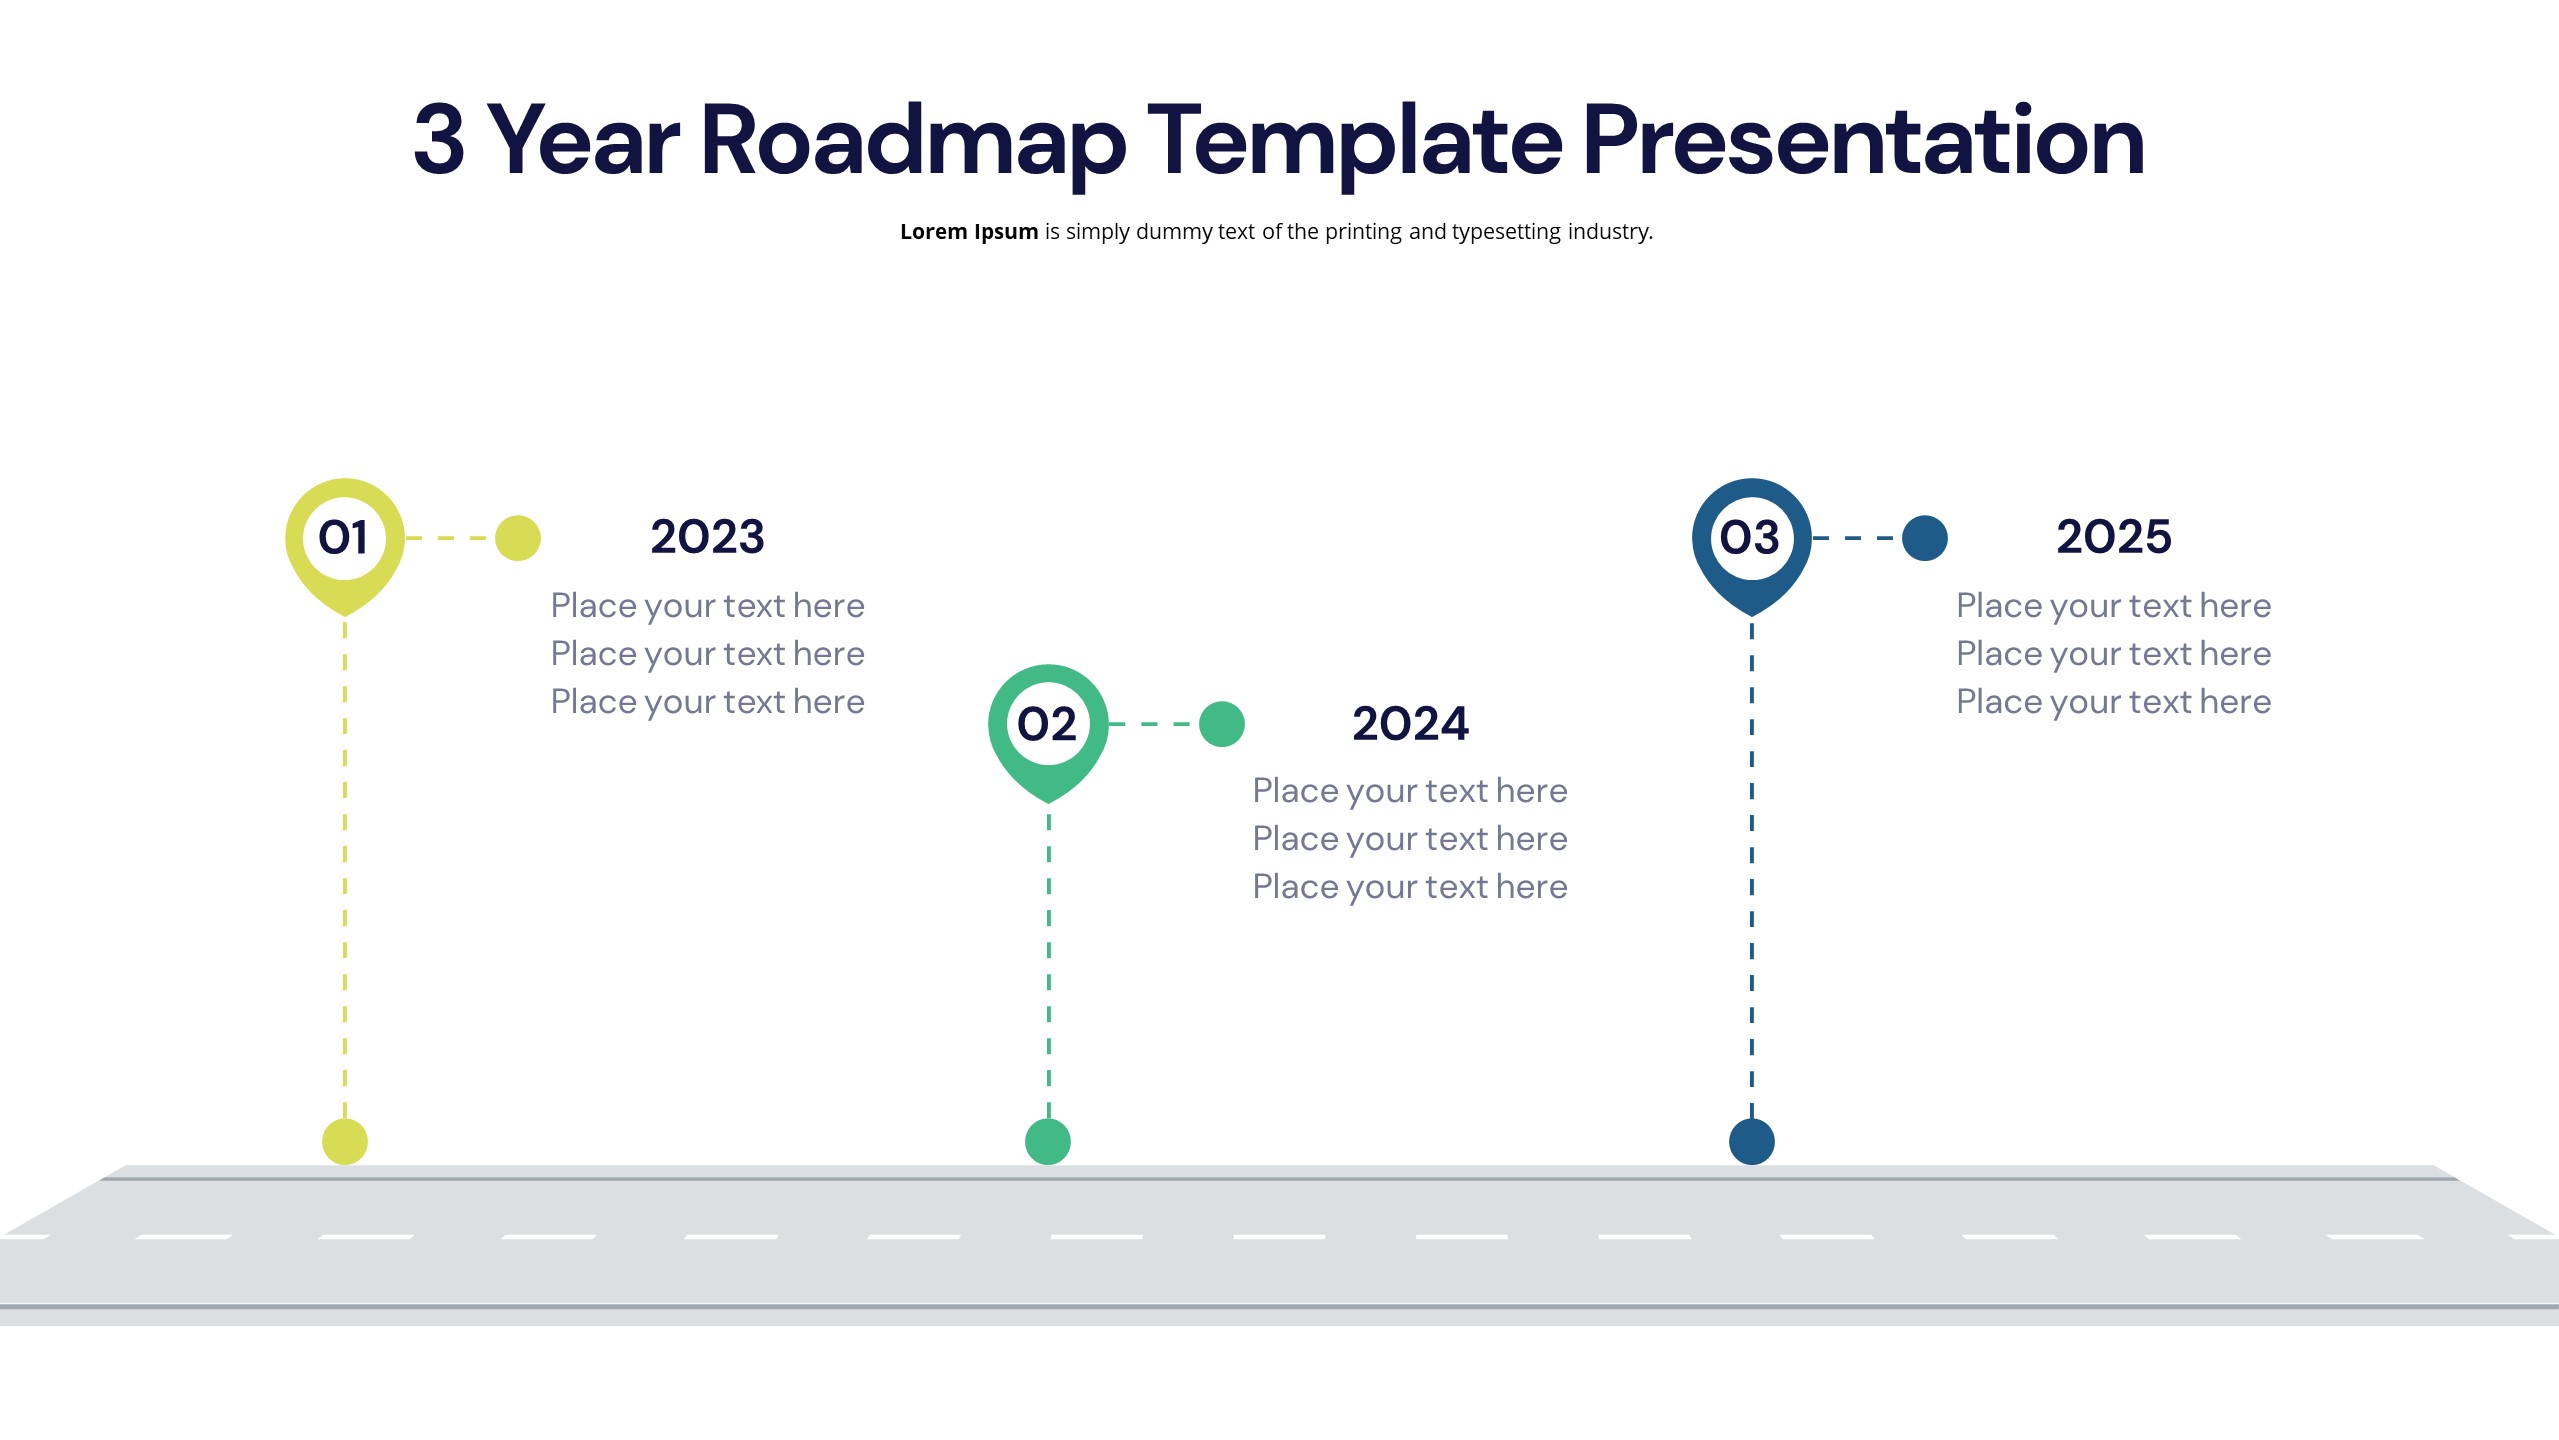 3 Year Roadmap Template Presentation